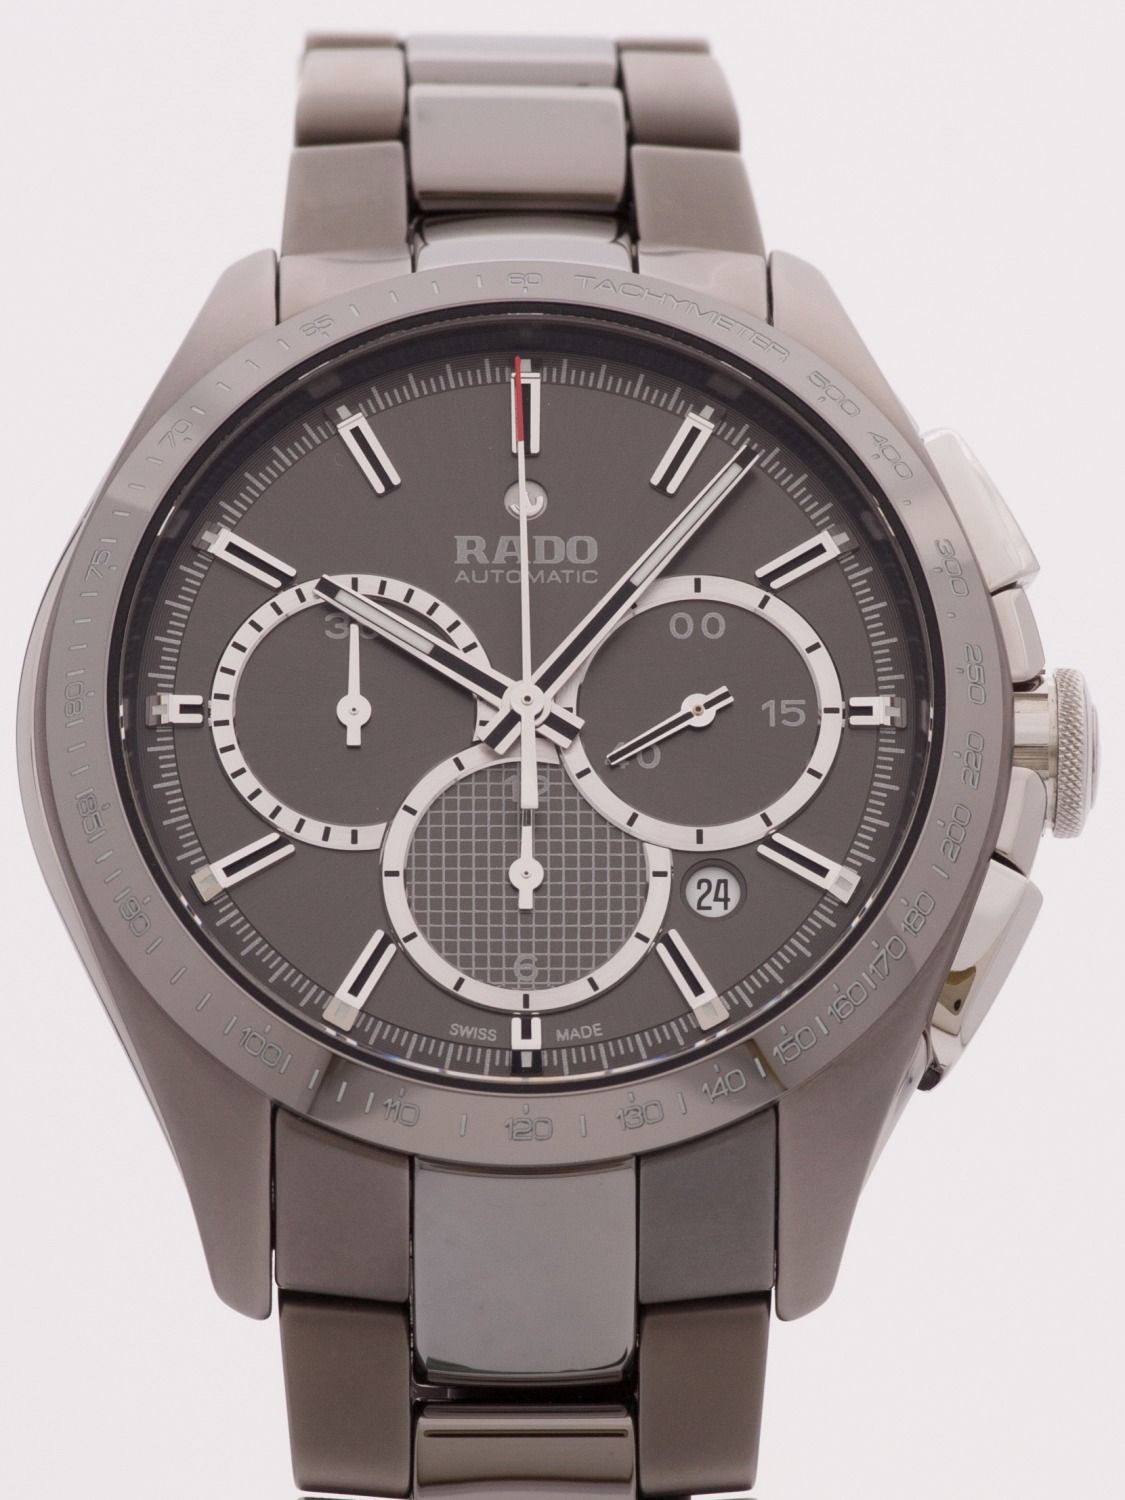 Rado Hyperchrome Match Point Limited Edition 999 watch, light grey